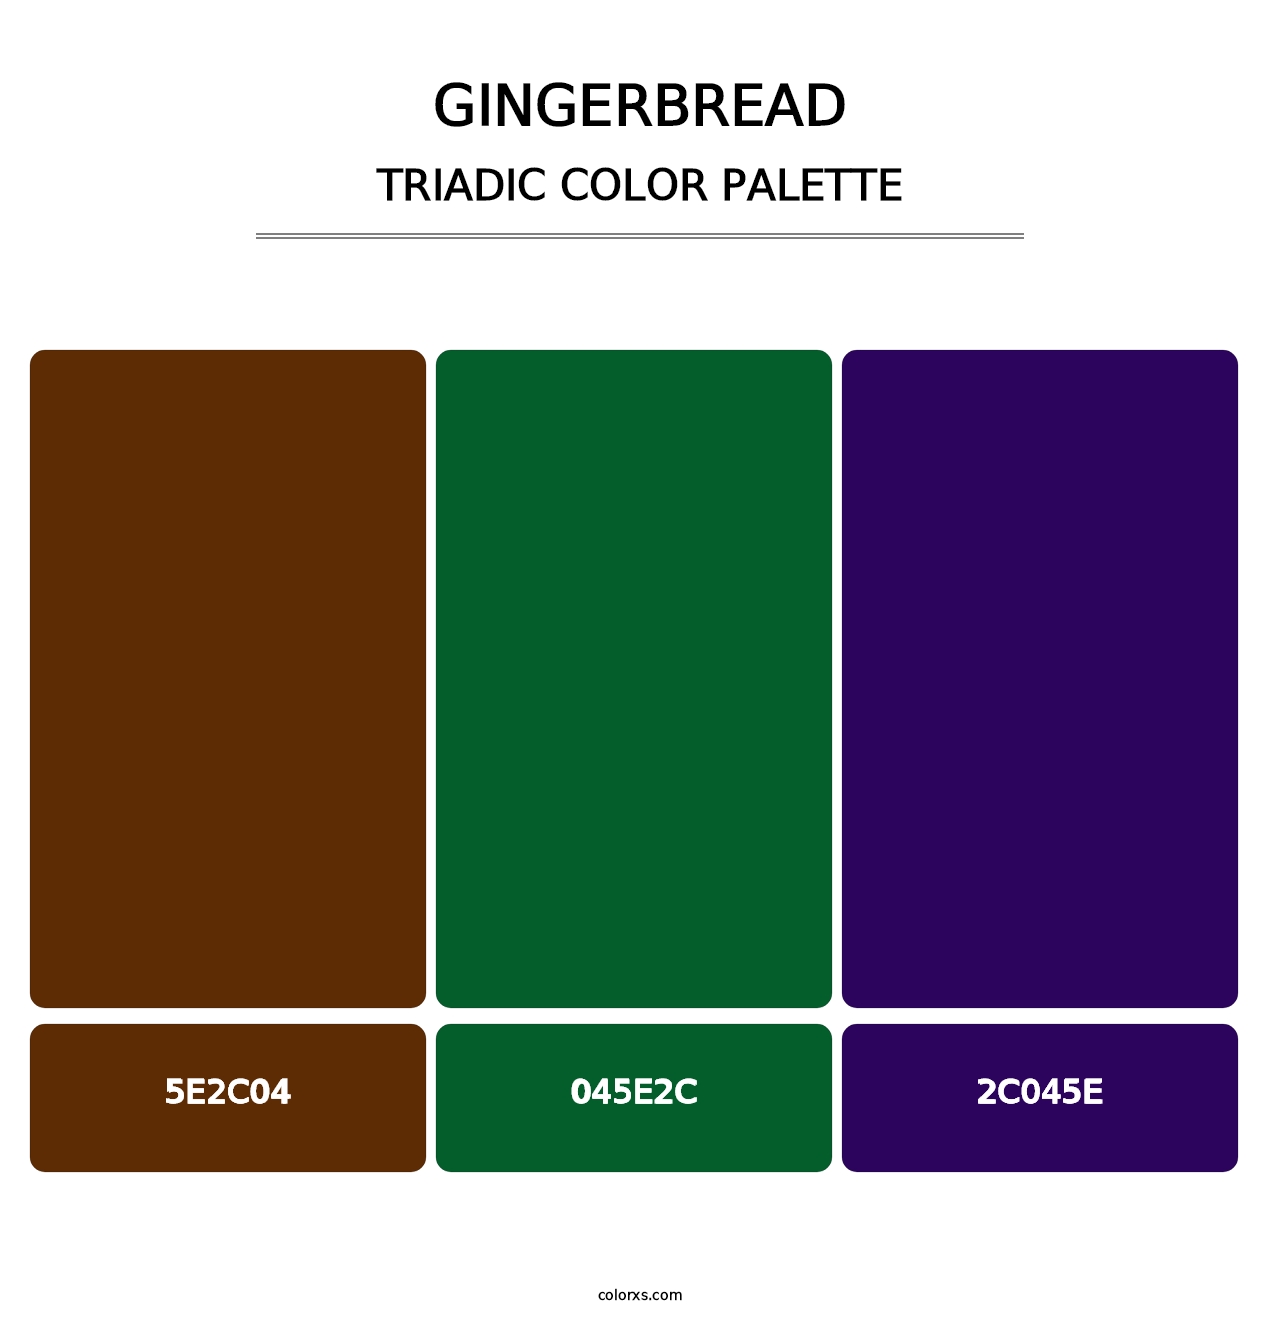 Gingerbread - Triadic Color Palette